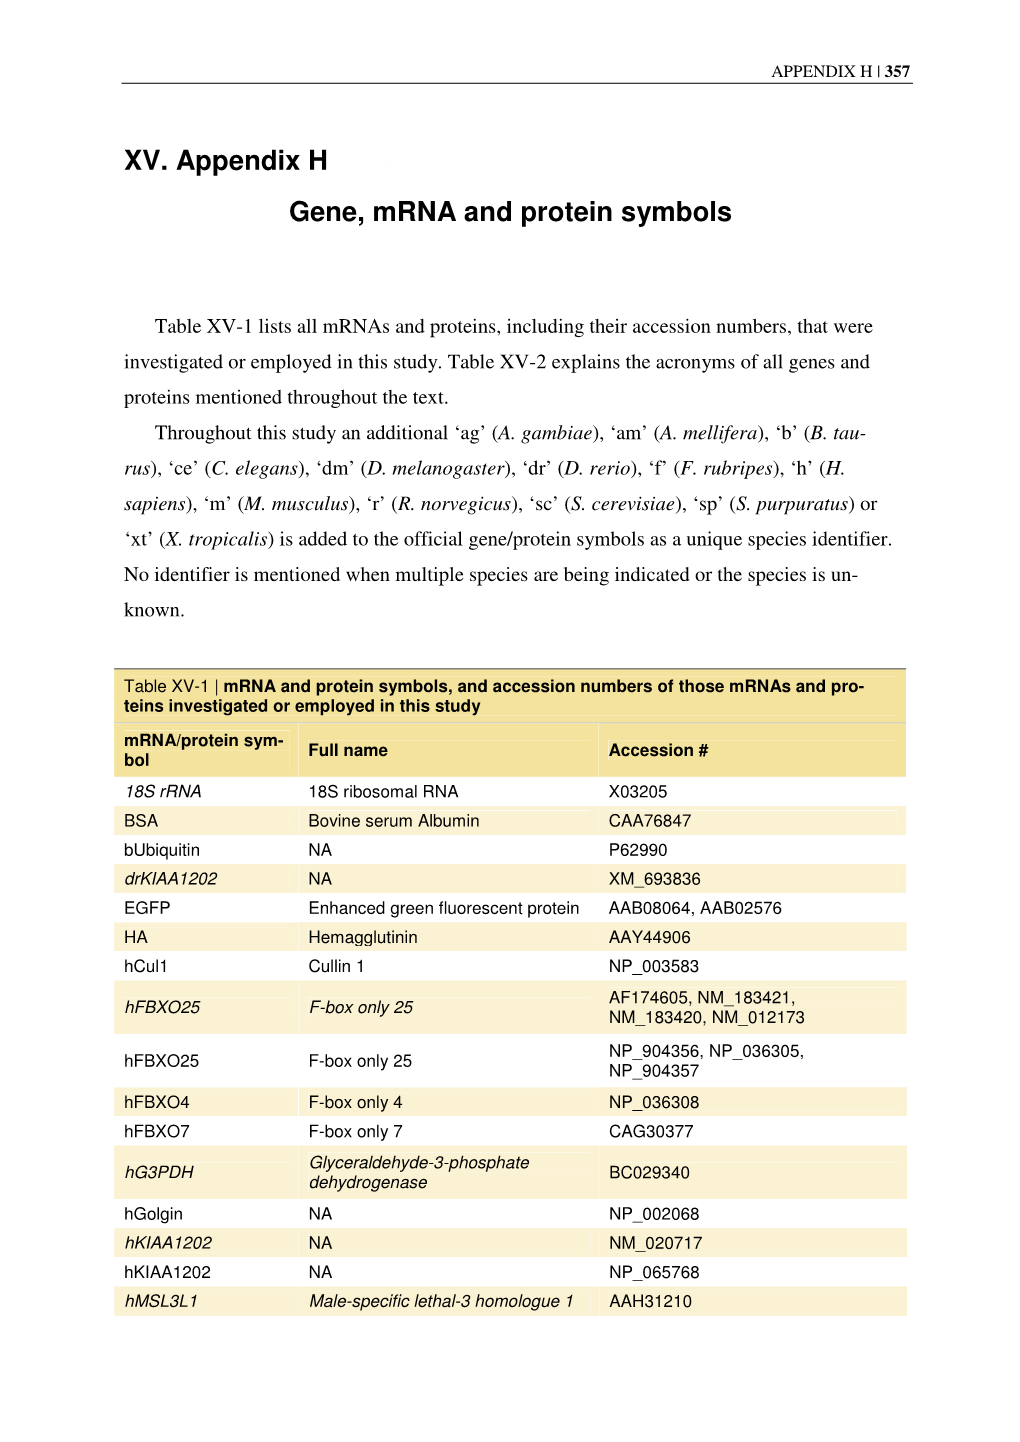 Gene, Mrna and Protein Symbols Gene, Mrna and Protein Symbols